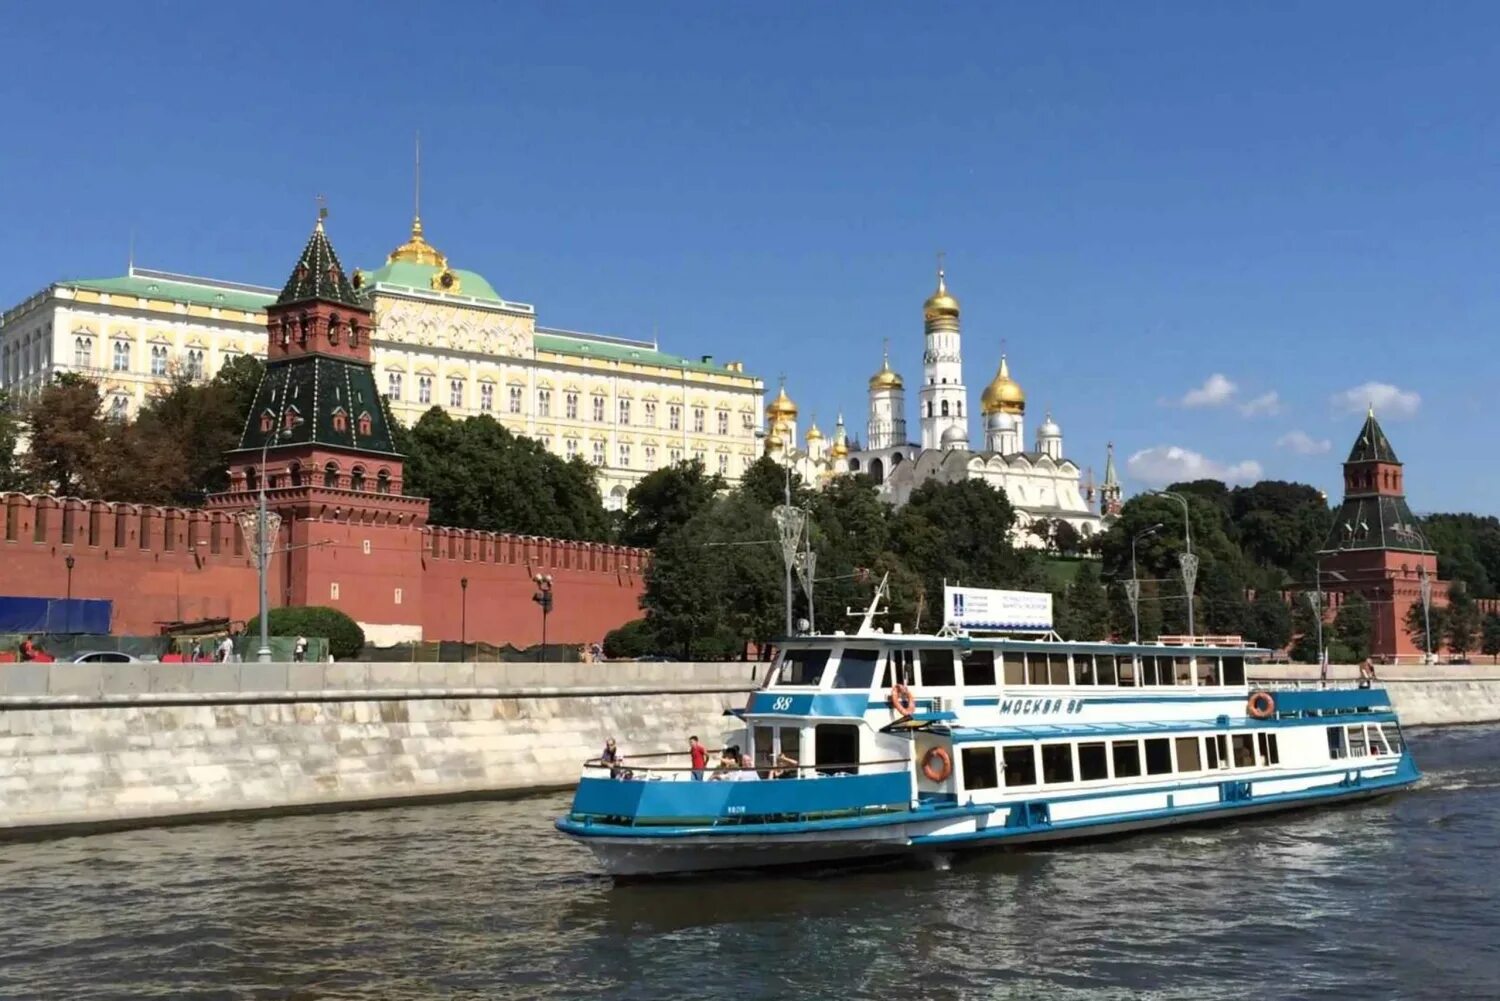 Москва Ривер. Реки Москвы. Boat trip Moscow River. Москва река в Москве. Москва река краткое содержание